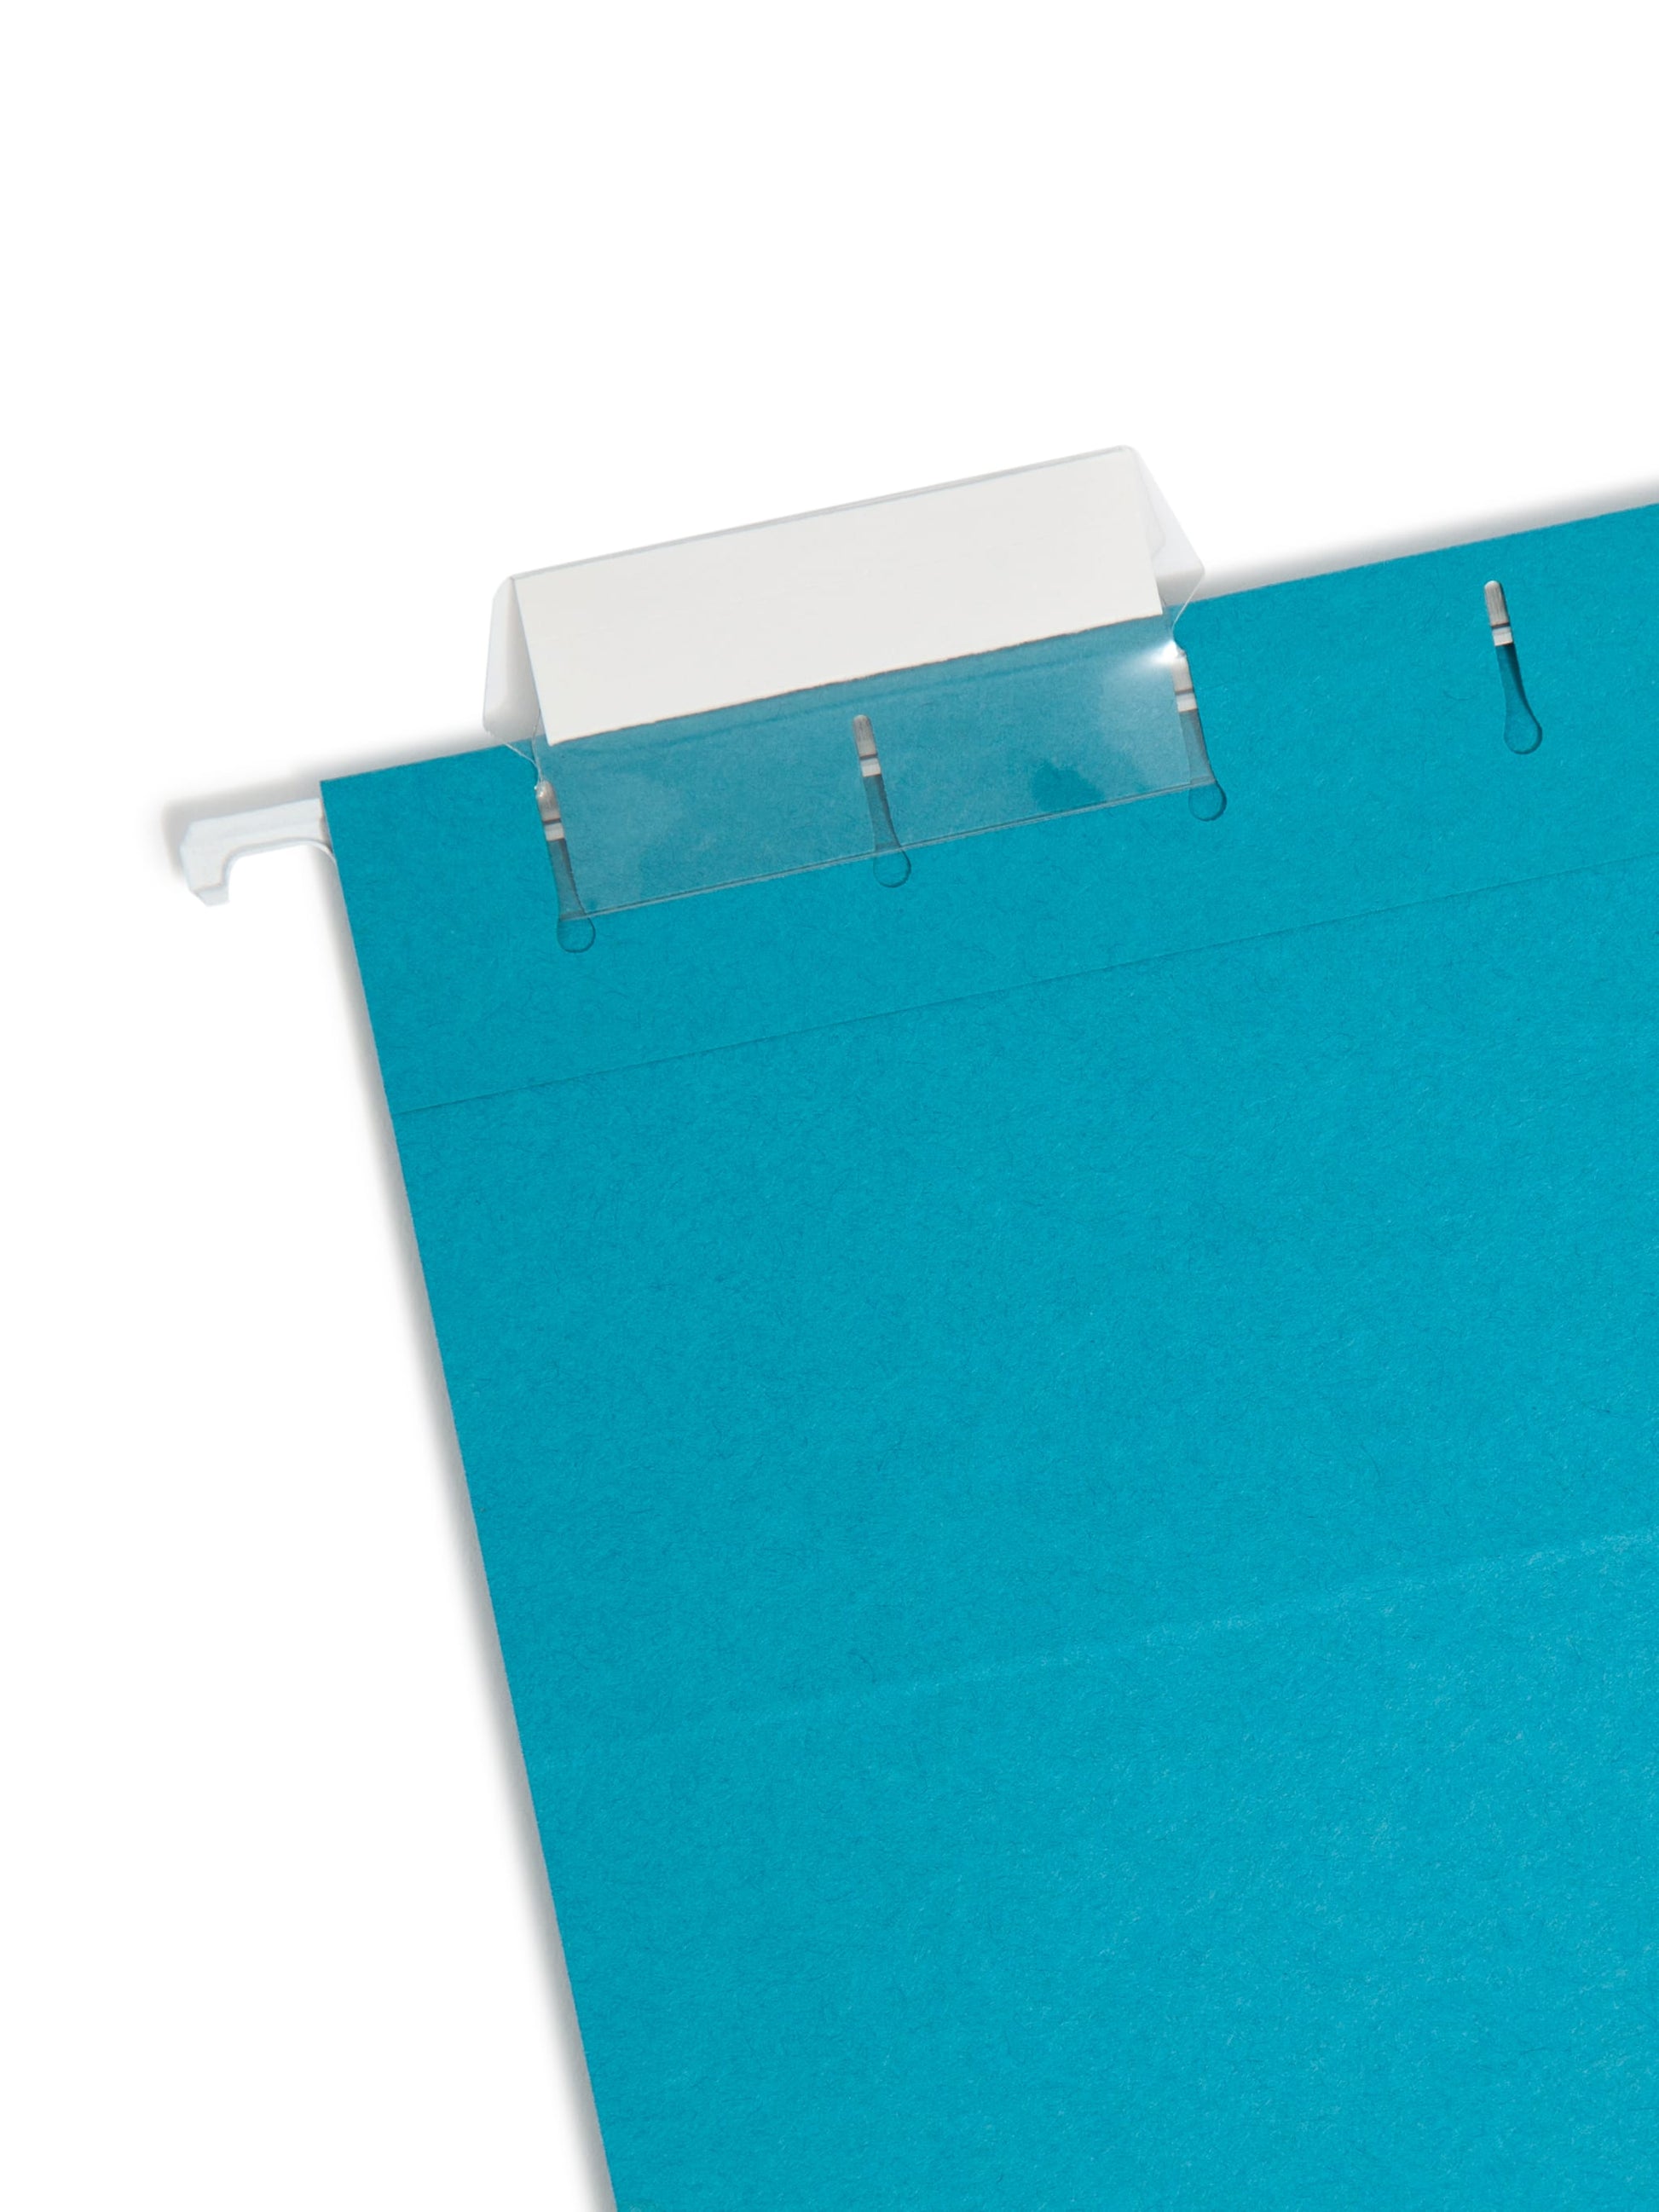 Standard Hanging File Folders with 1/5-Cut Tabs, Teal Color, Letter Size, Set of 25, 086486640749